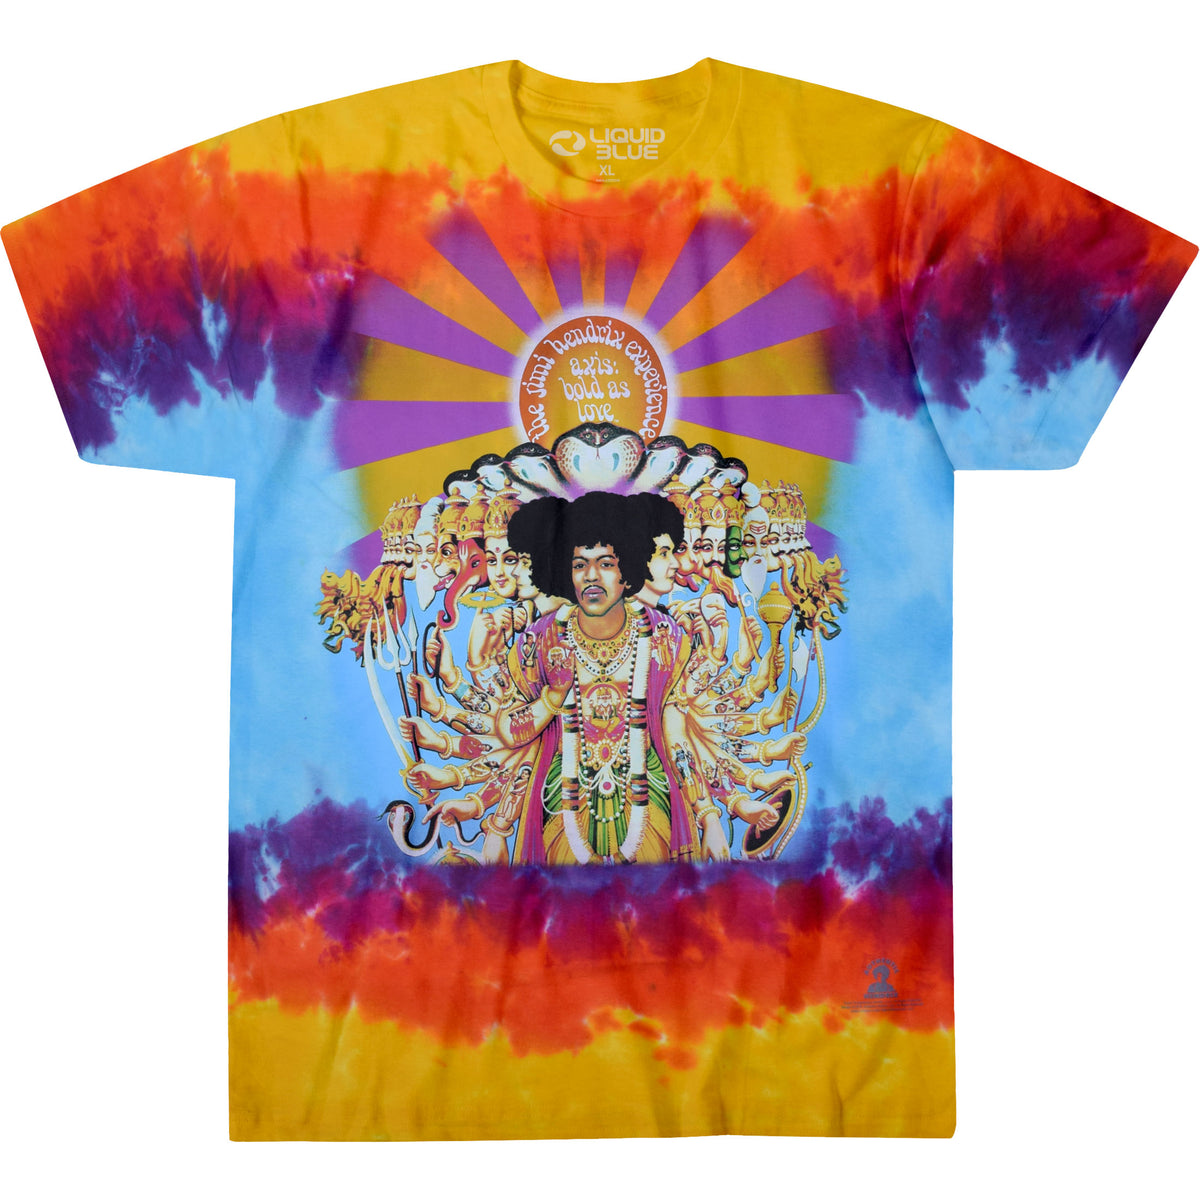 Jimi Hendrix - Axis Bold As Love T-Shirt (Men)